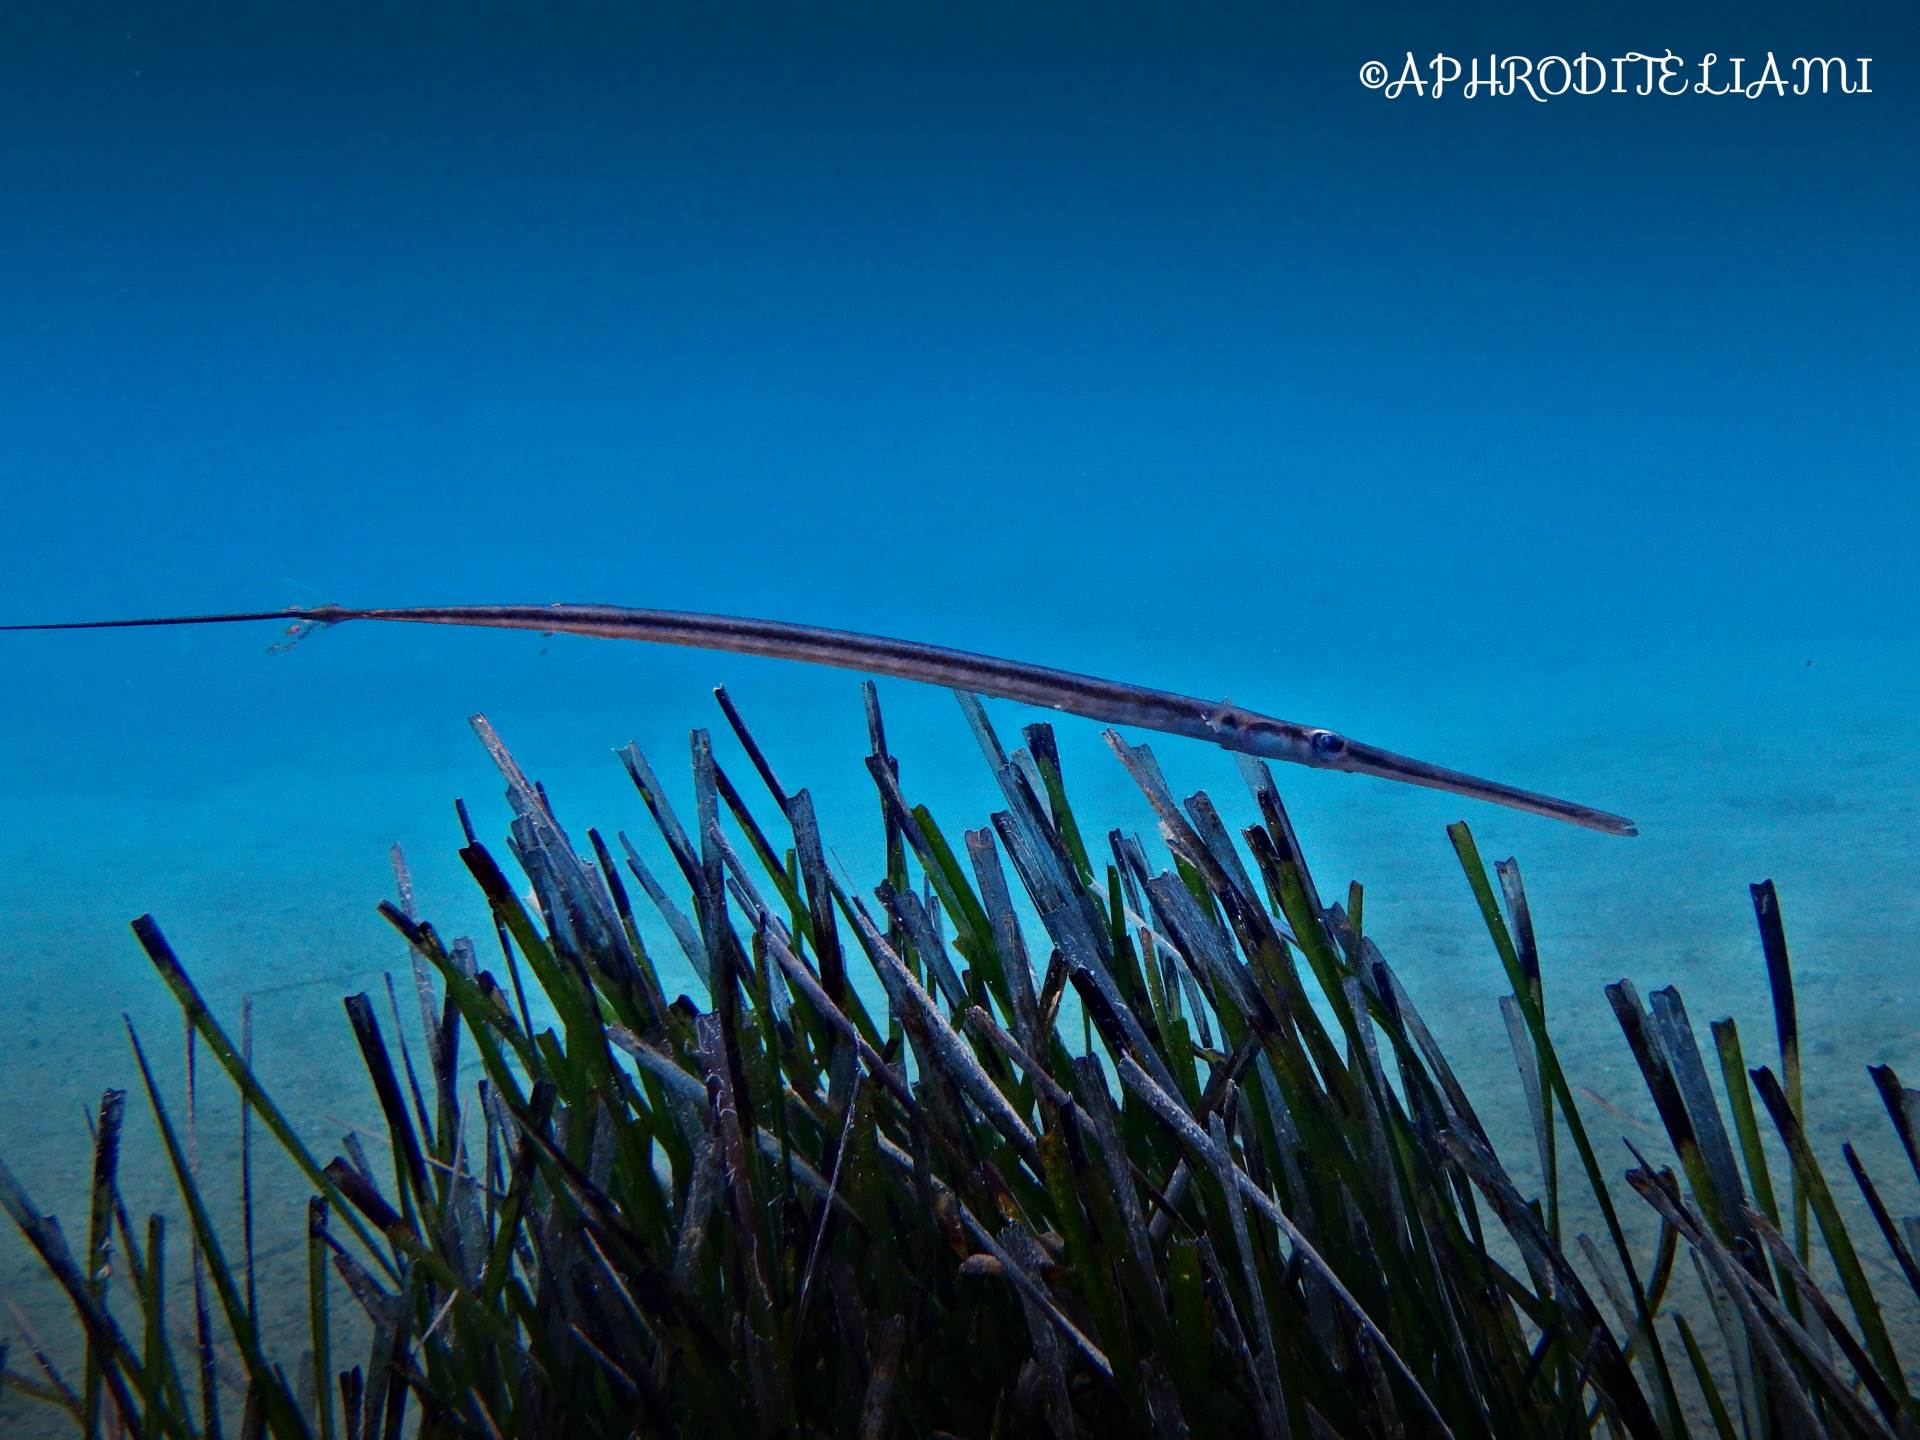 #scubadiving #scuba #diving #marinelife #sealife #sea #aegeansea #star #seastar #featherseastar #starfish #giantdoris #crab #fish #worm #flabellina #animal #kos #kosisland #greece #hellas #underwater #underwaterphotography #holiday #ecology #enviroment #liamisdivecentre